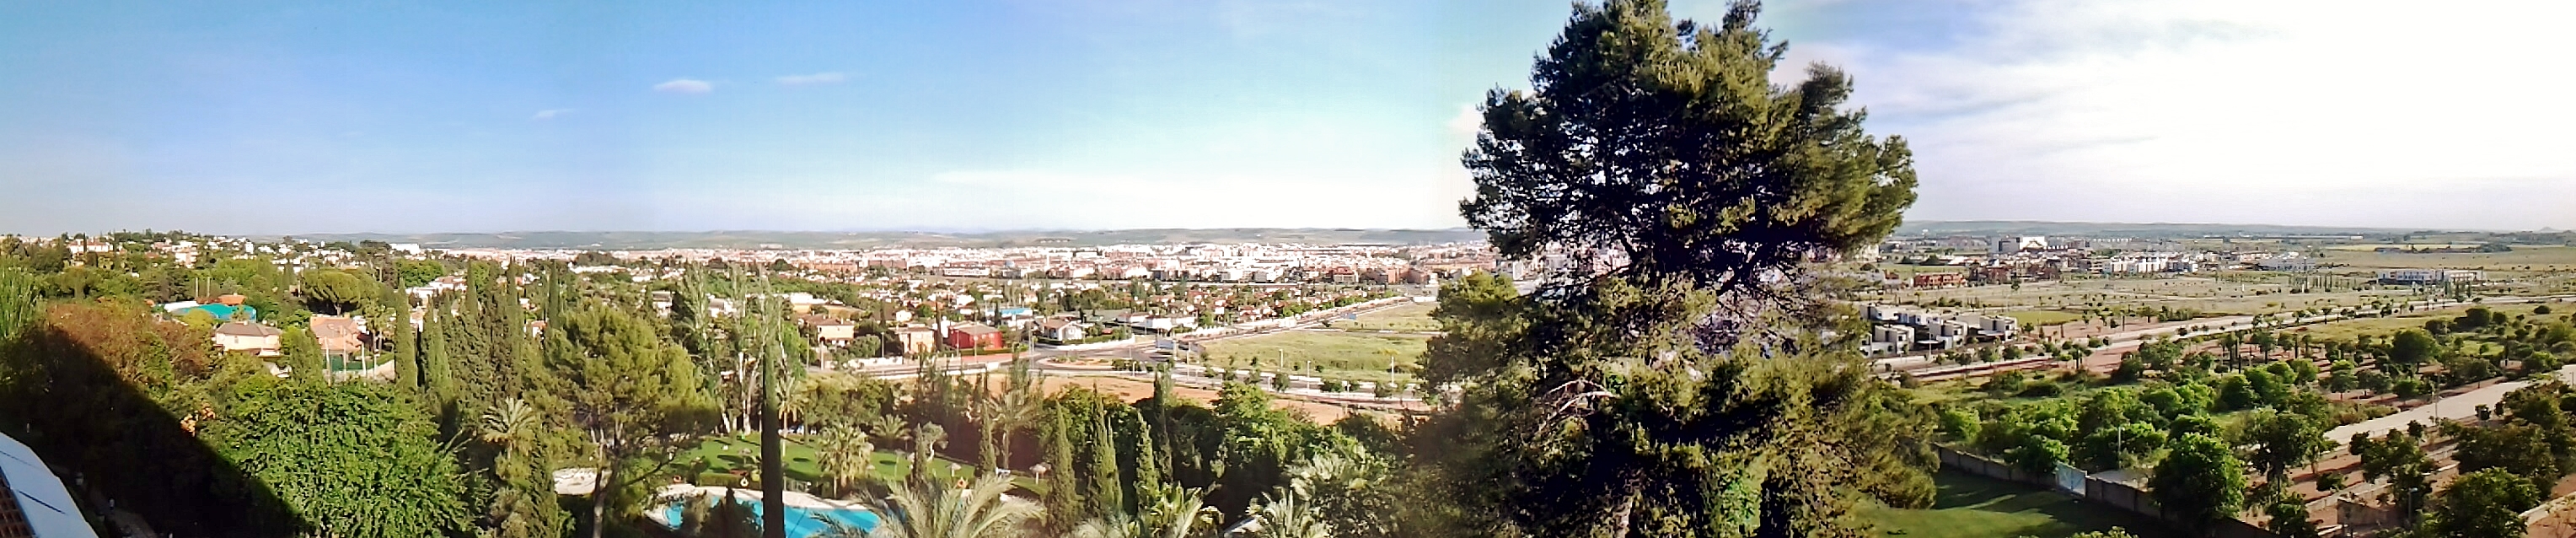 Foto: Vista panorámica - Córdoba (Andalucía), España